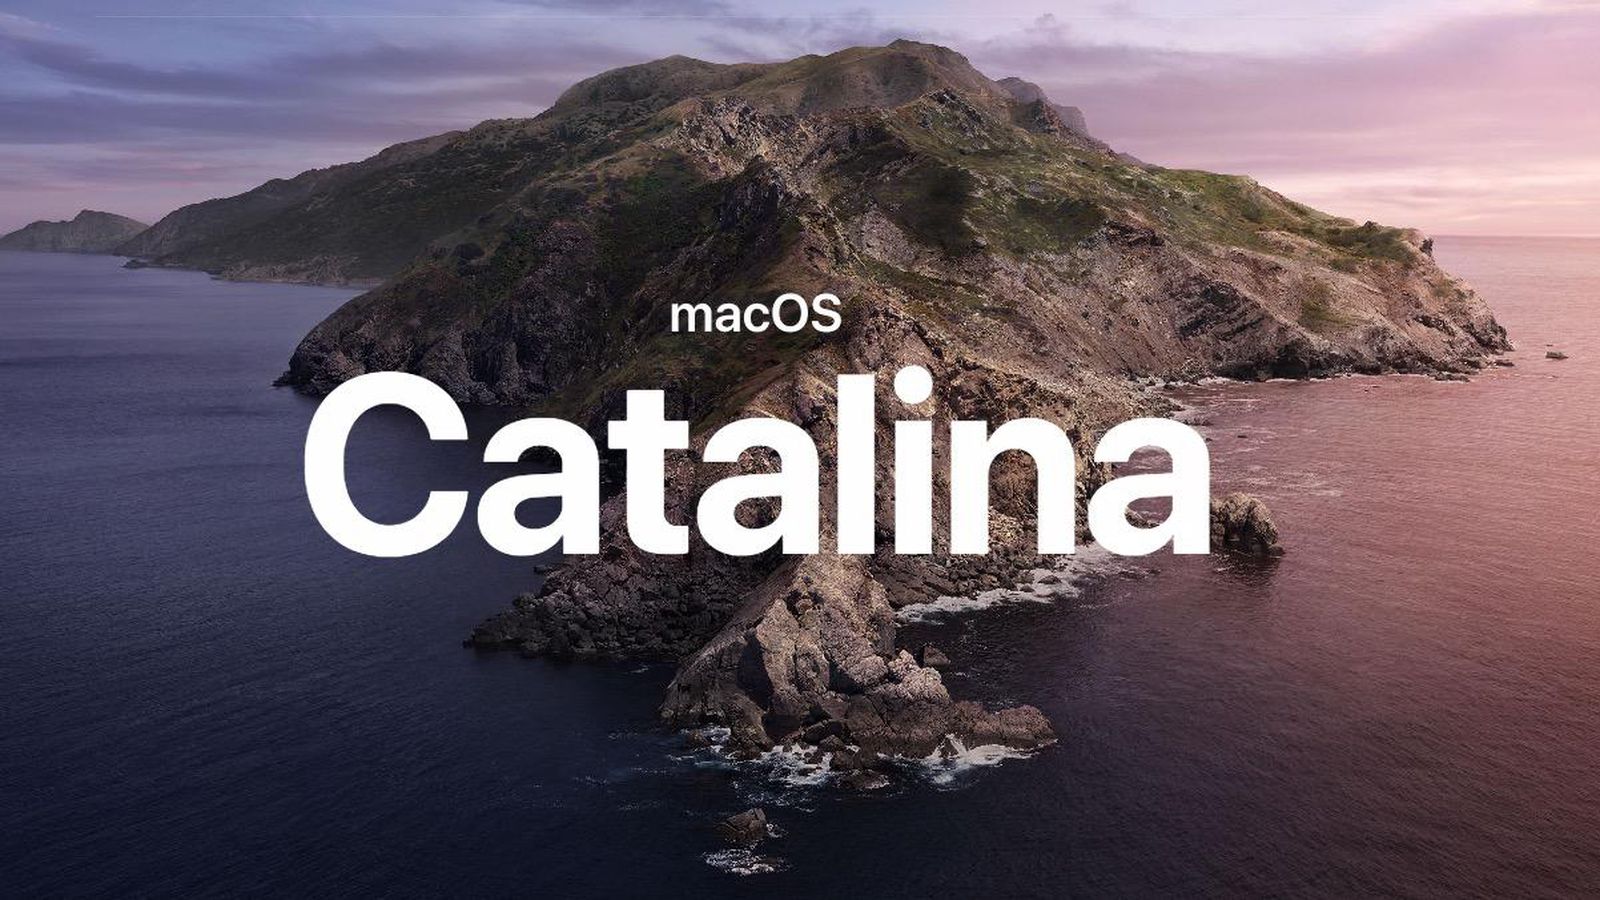 Mac Os X Imac G5 Download